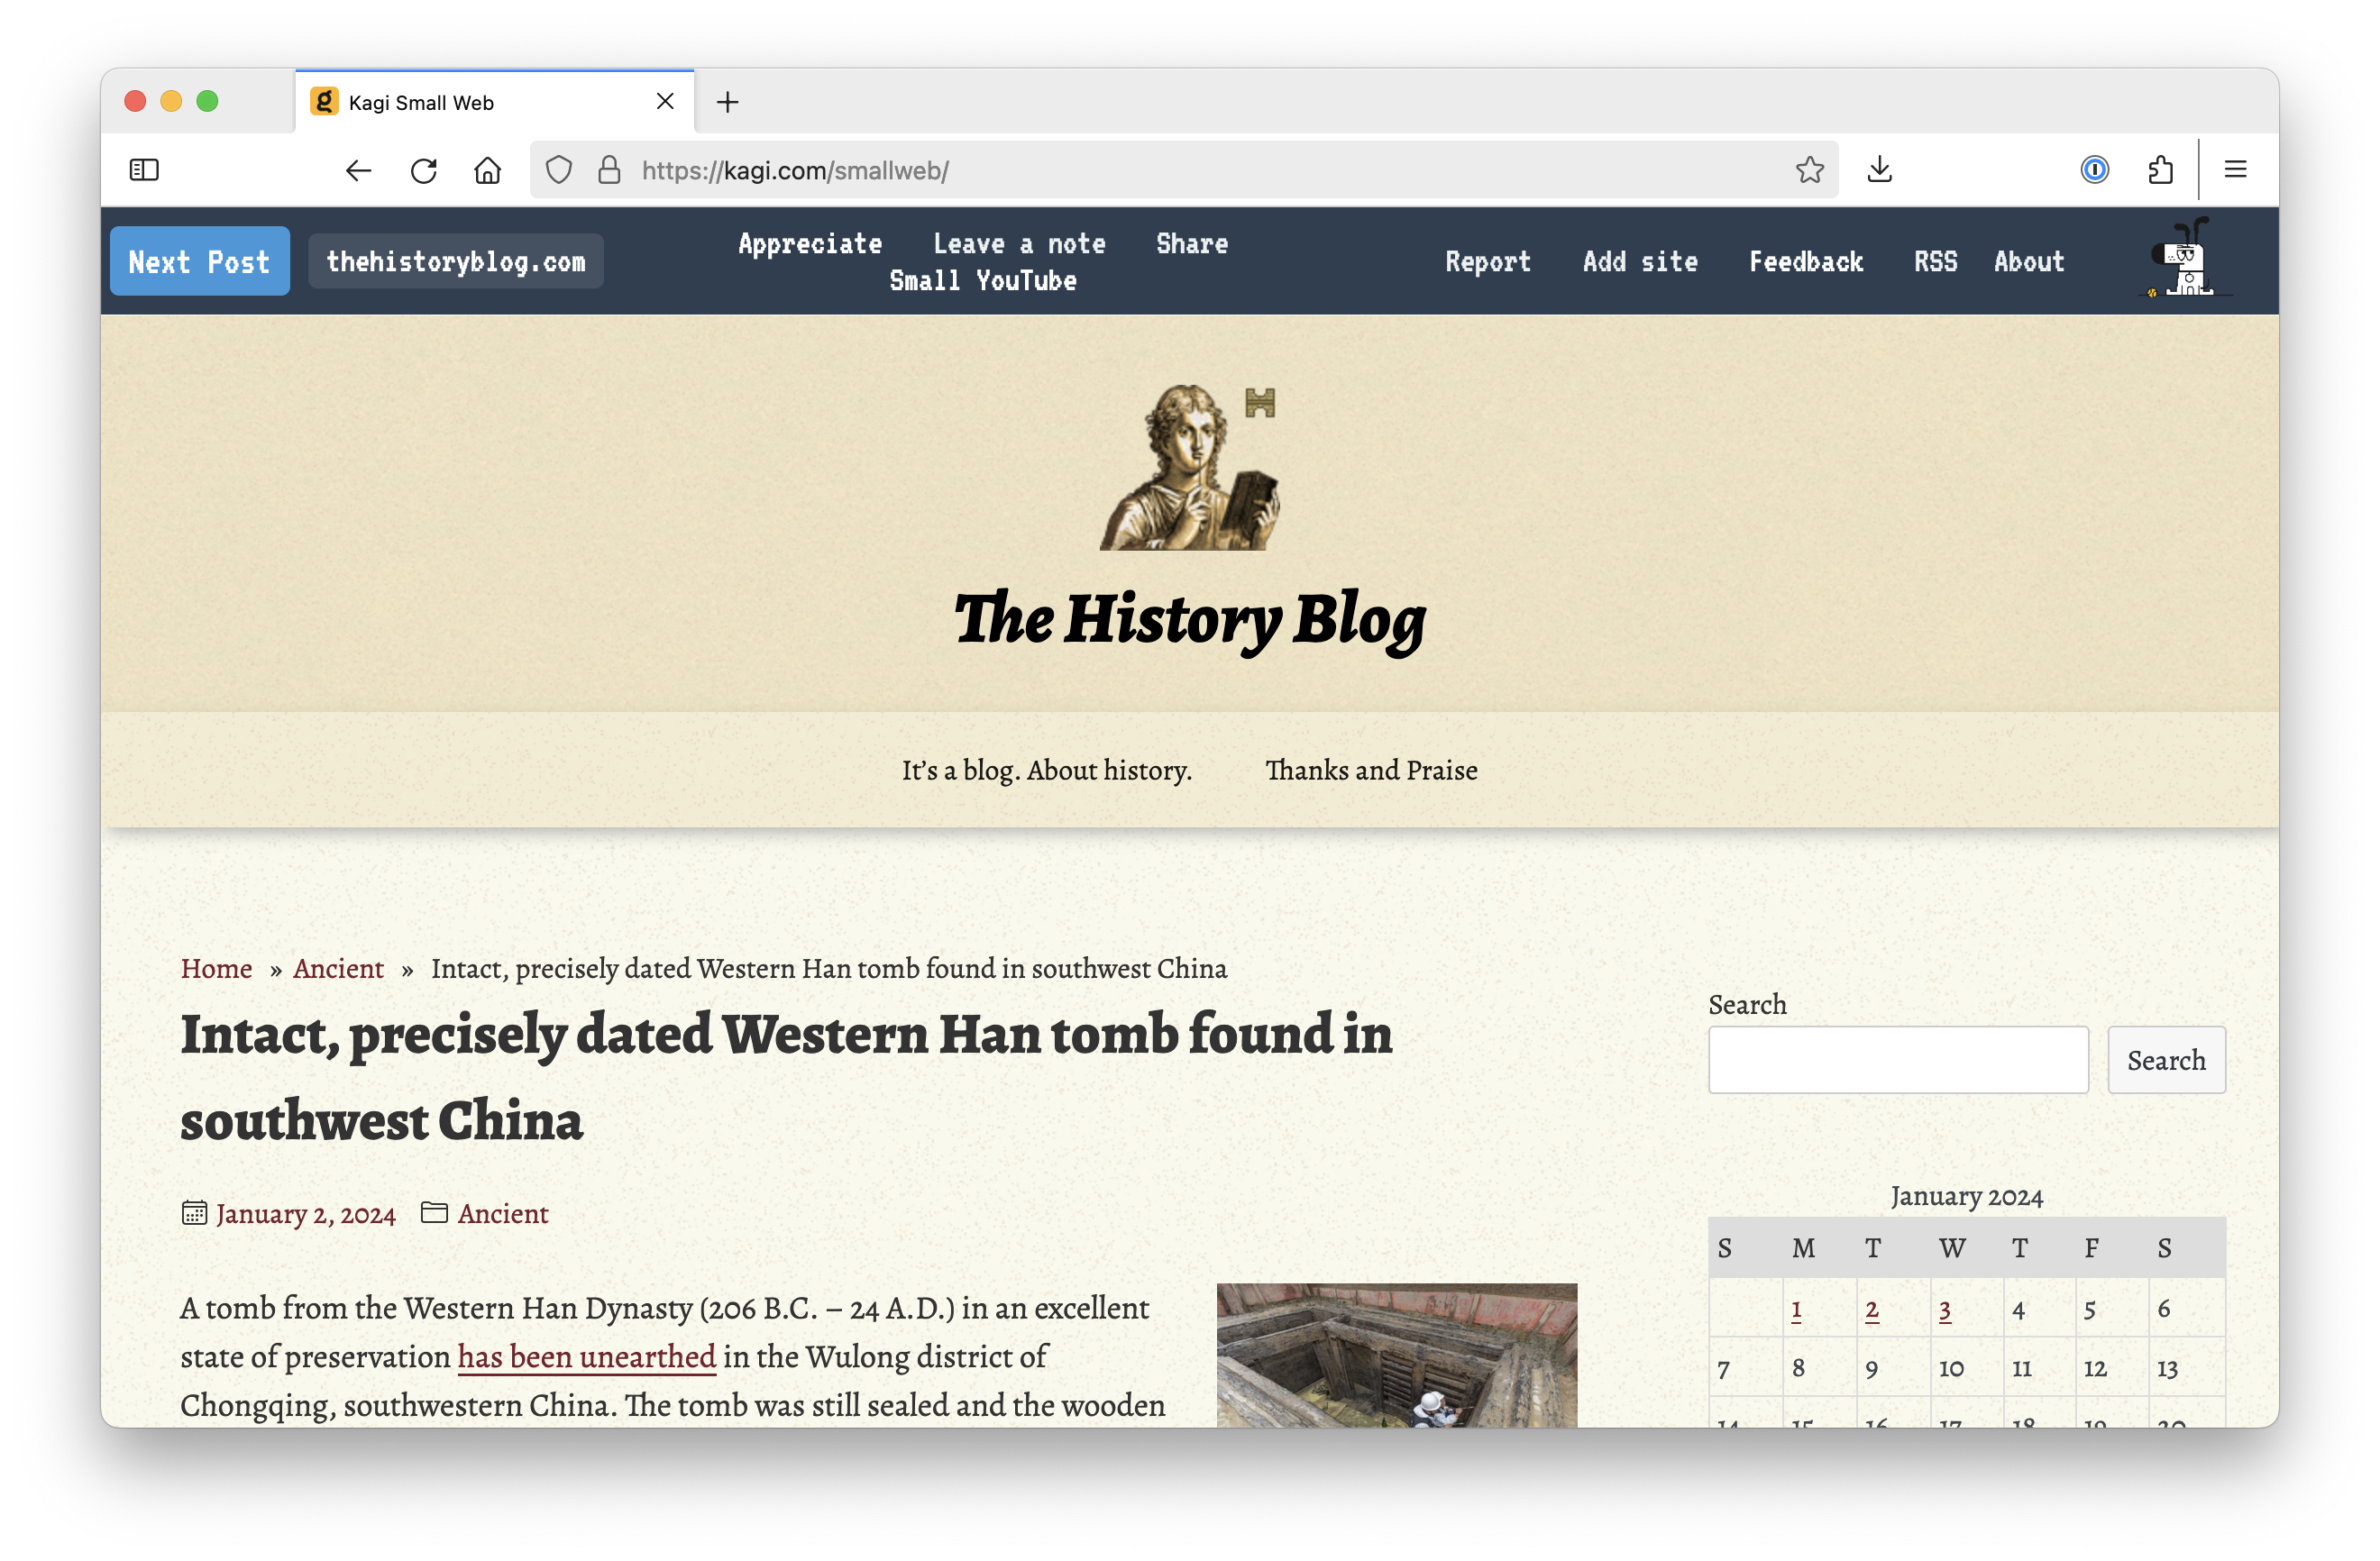 A screenshot of Kagi Small Web showcasing the website The History Blog.